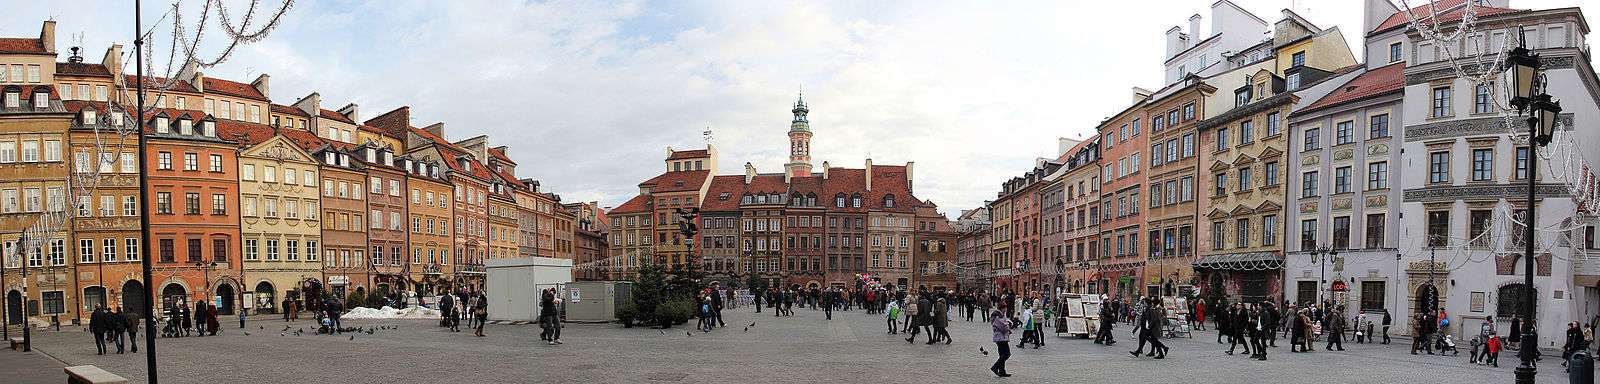 Warsaw Old Town Market Square Panorama